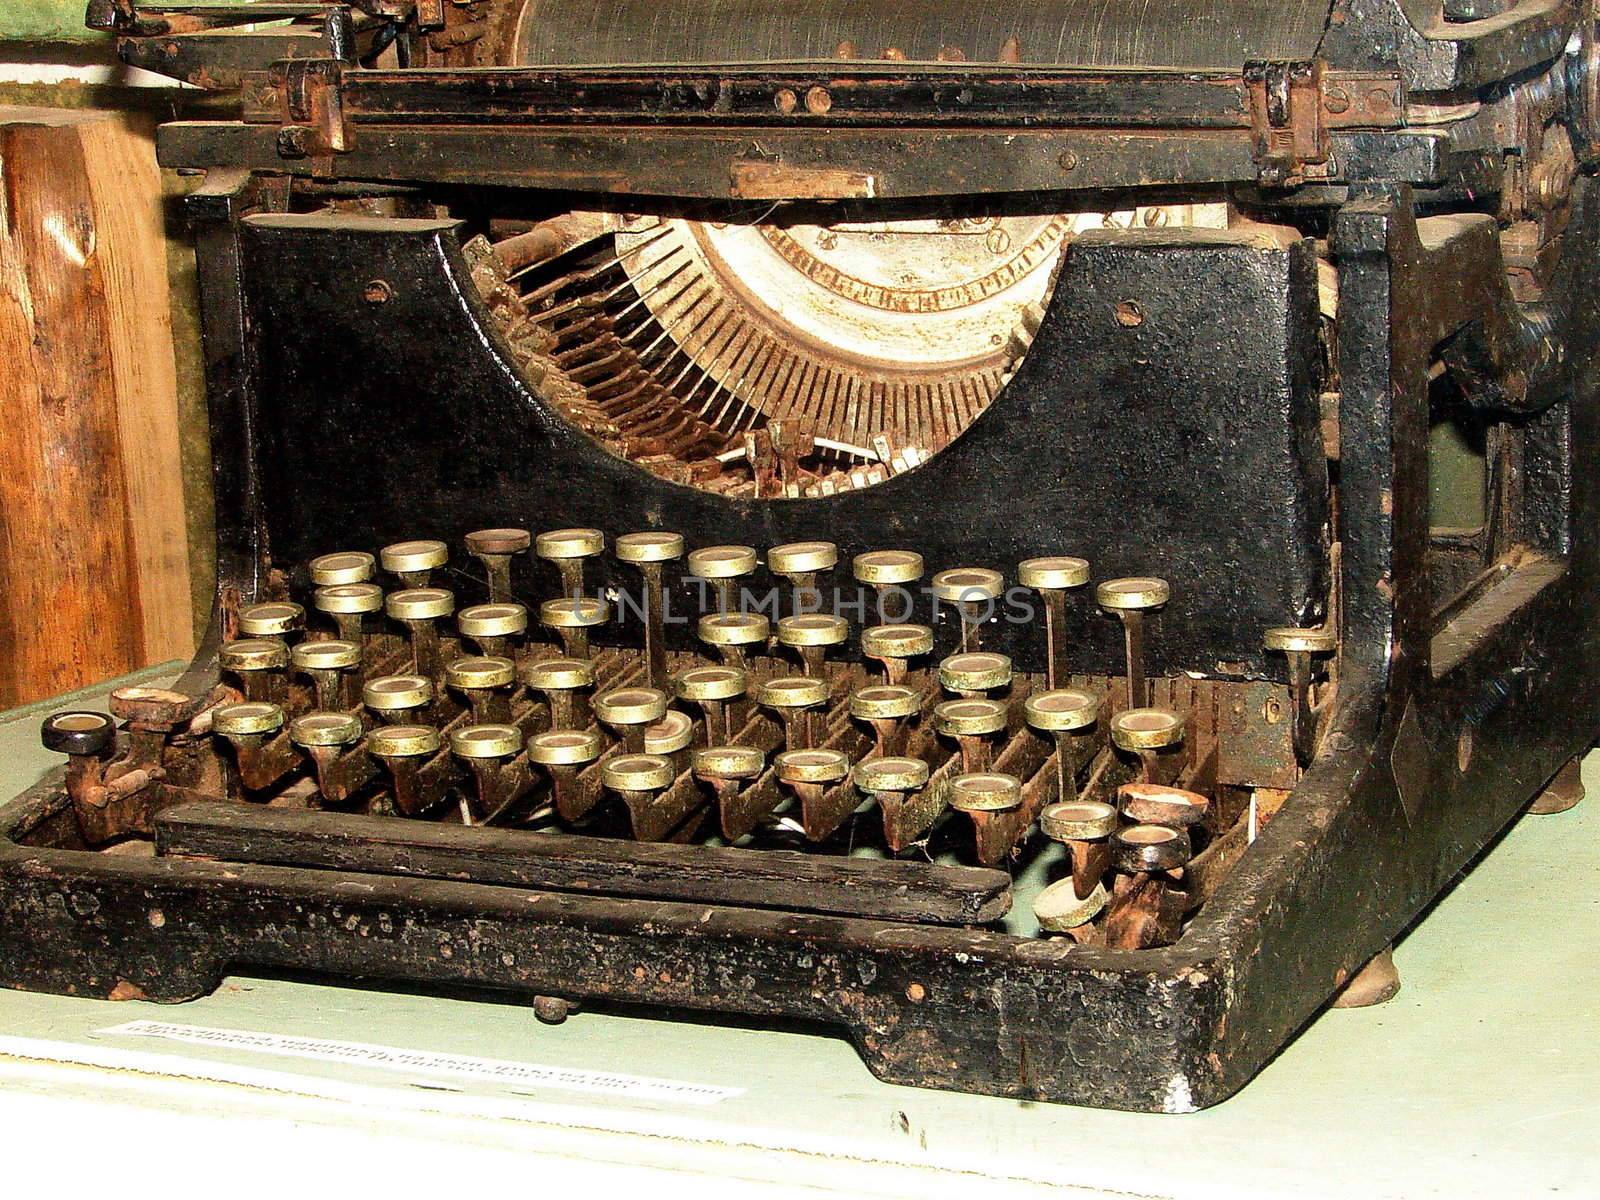 obsolete vintage typewriter by fotosergio